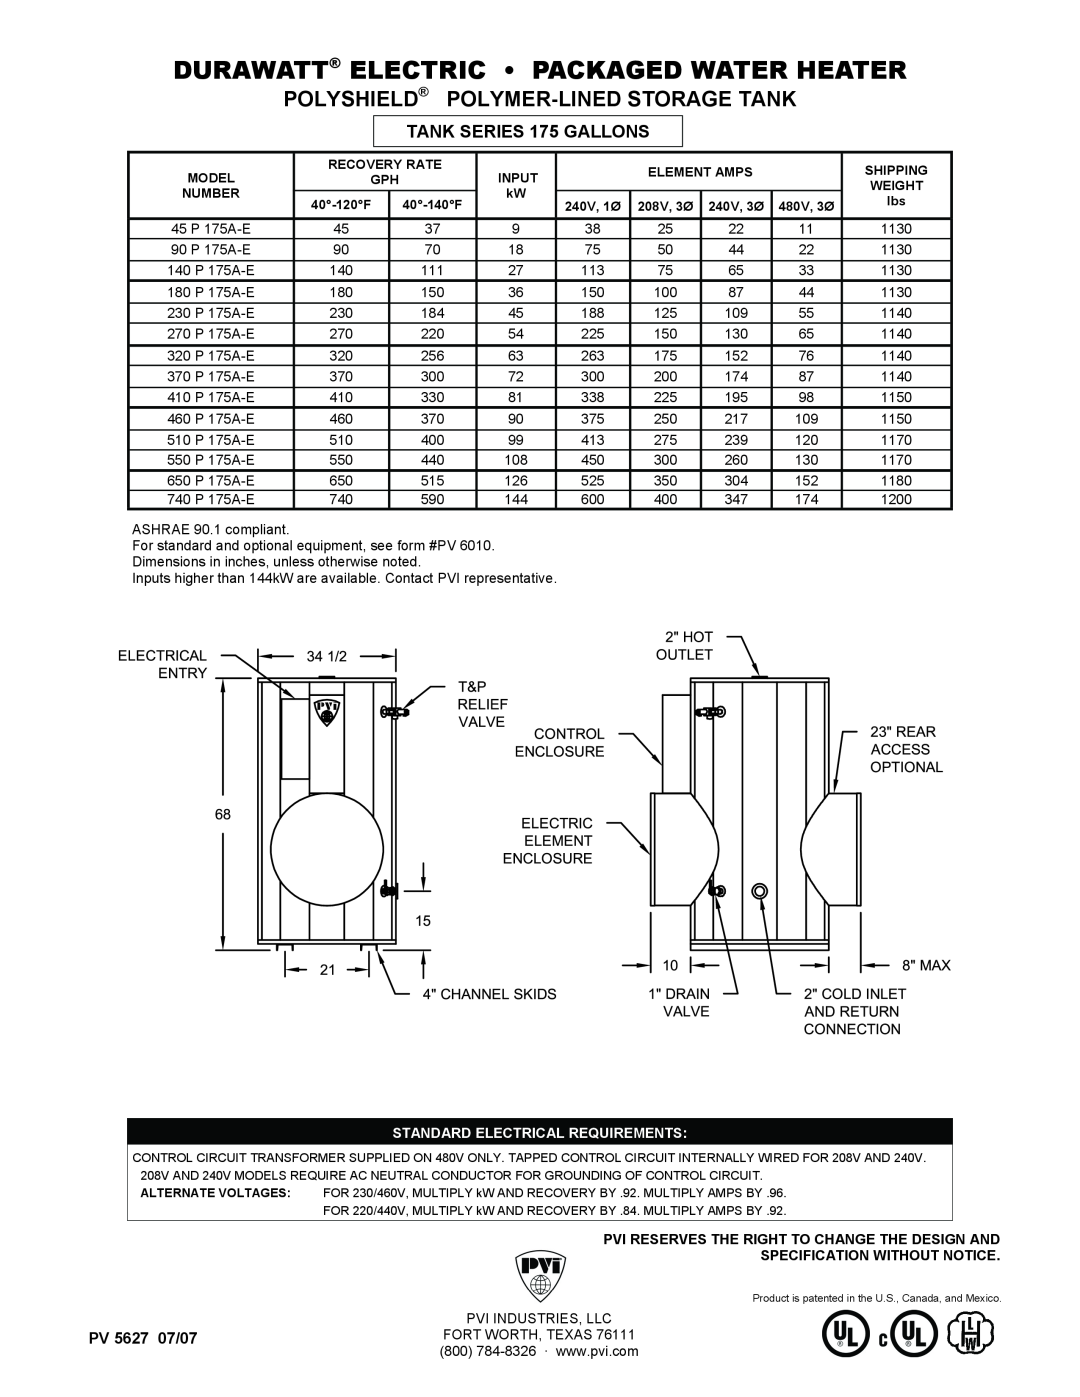 PVI Industries 550P175A-E dimensions Durawatt Electric Packaged Water Heater, Polyshield Polymer-Linedstorage Tank 